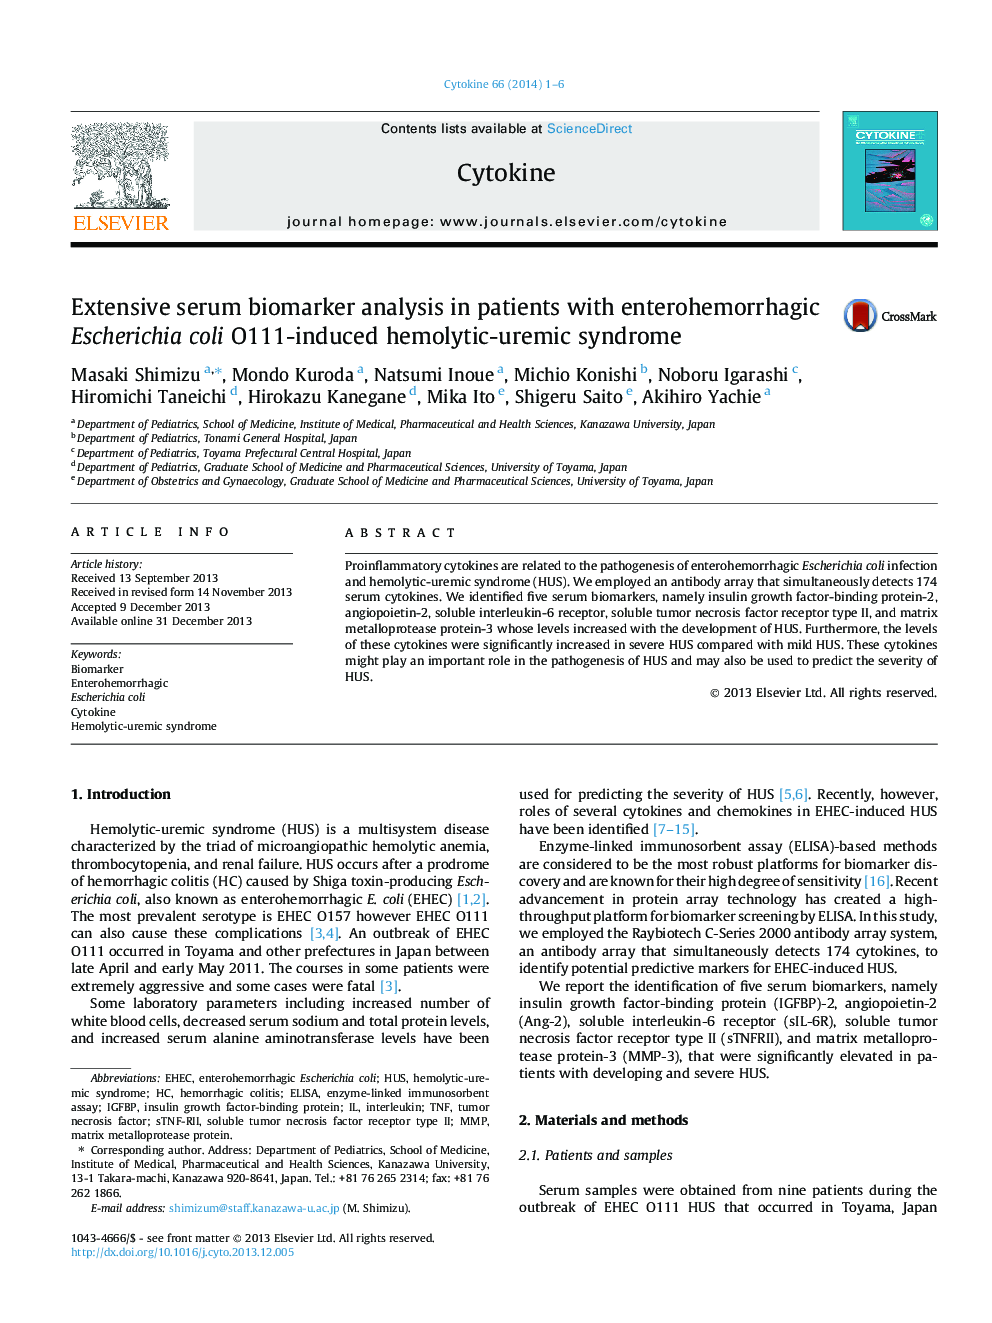 Extensive serum biomarker analysis in patients with enterohemorrhagic Escherichia coli O111-induced hemolytic-uremic syndrome